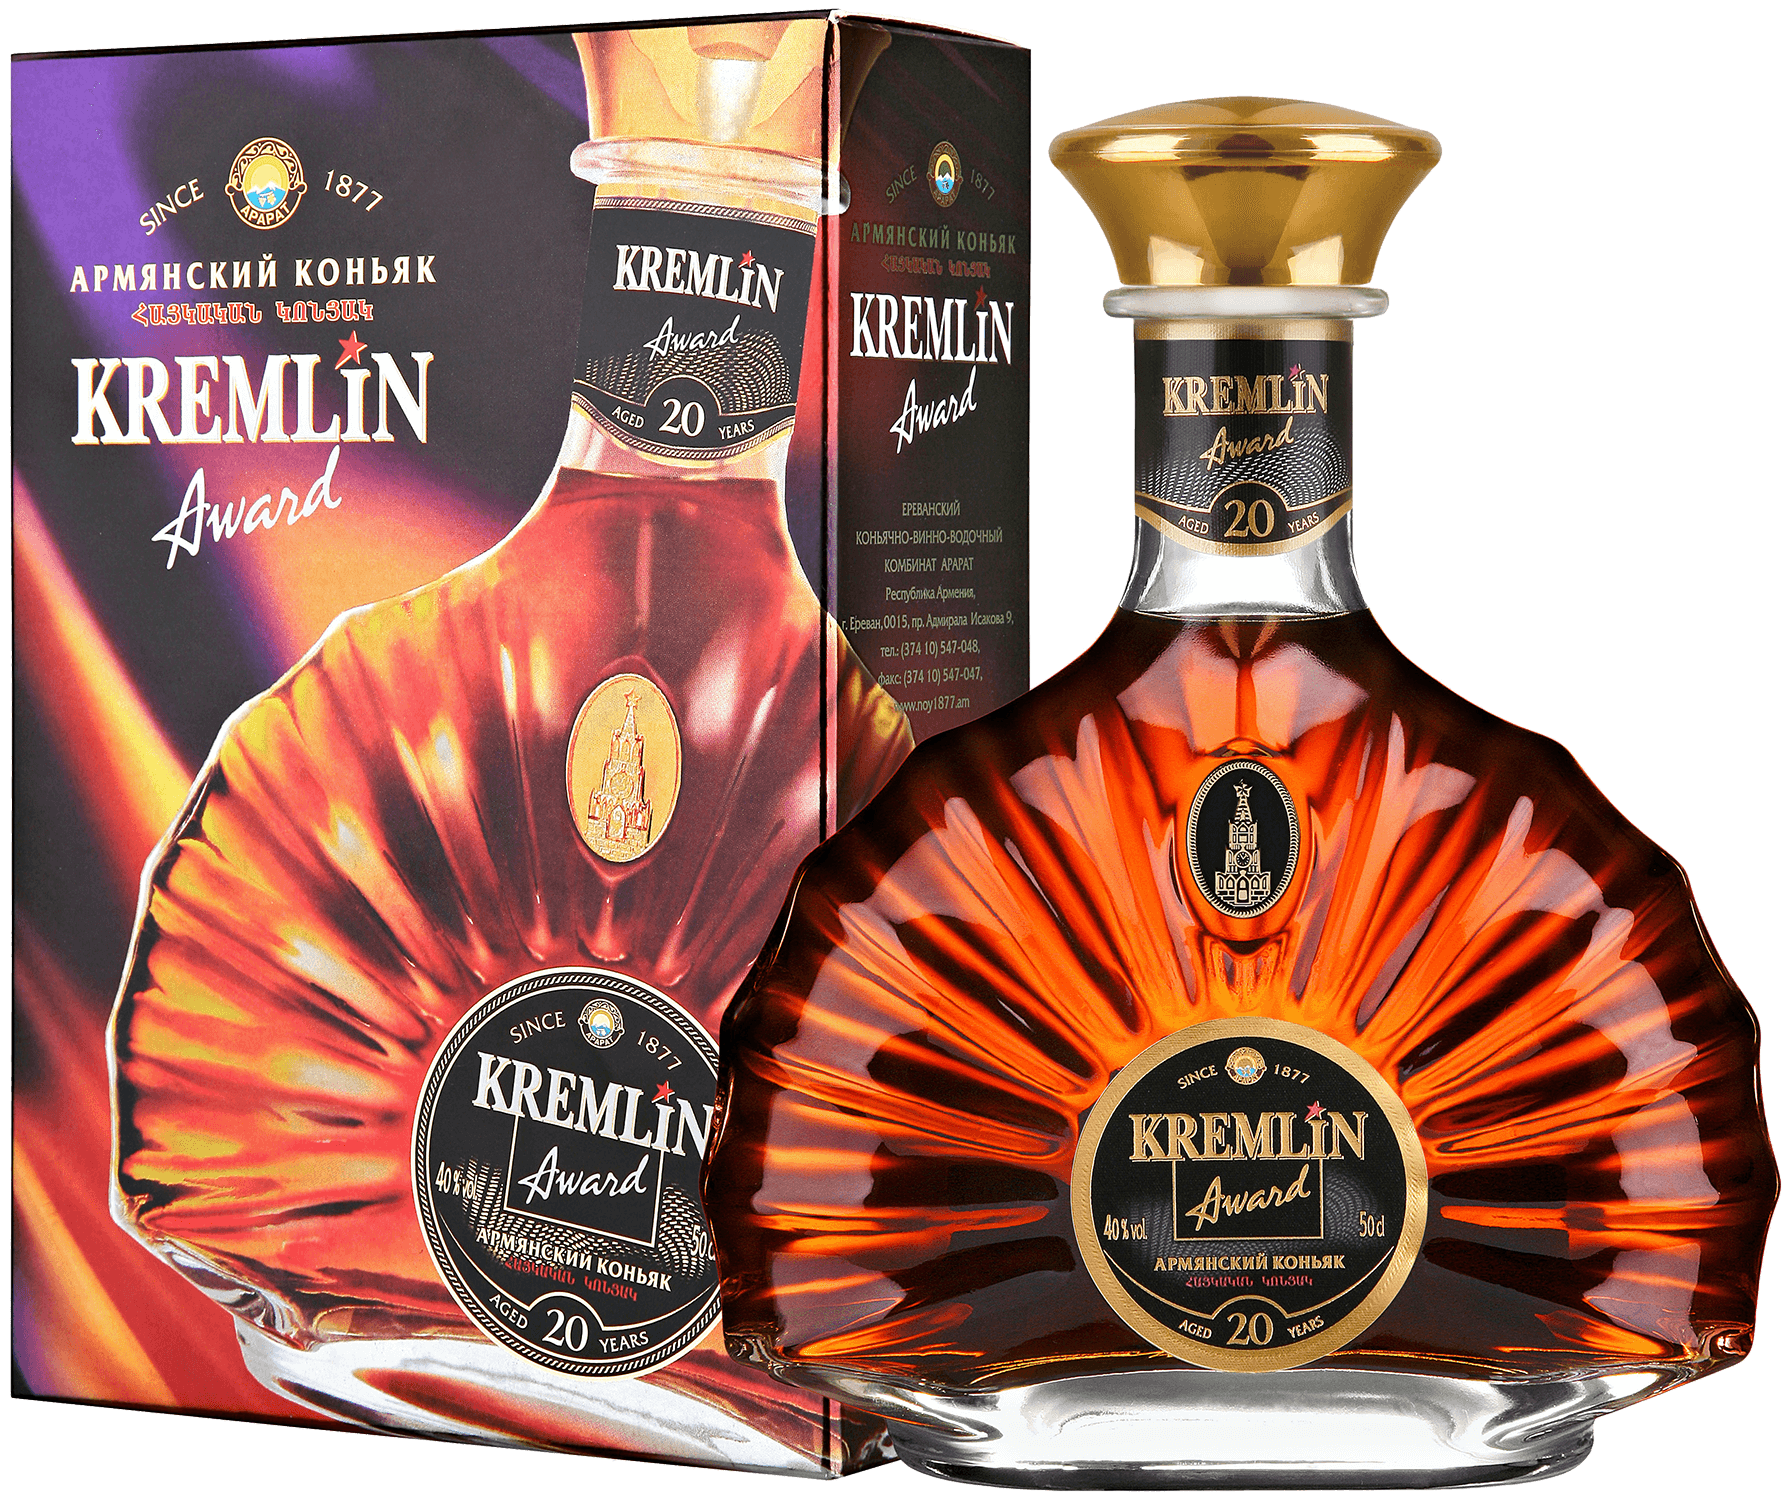 KREMLIN AWARD 20 Years (gift box) kremlin award grand premium vodka gift box